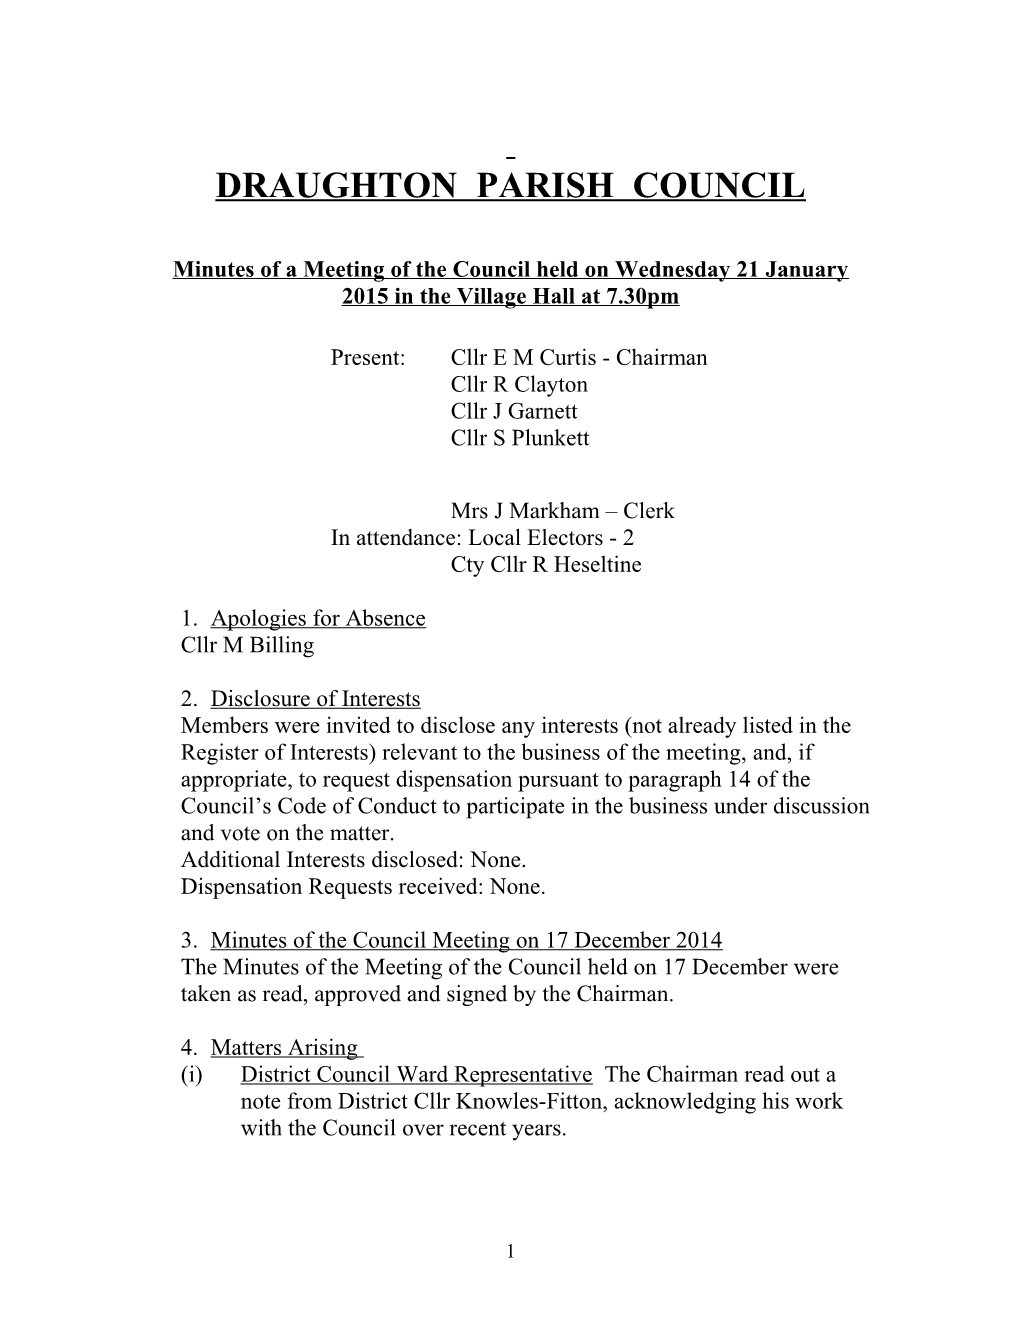 Draughton Parish Council